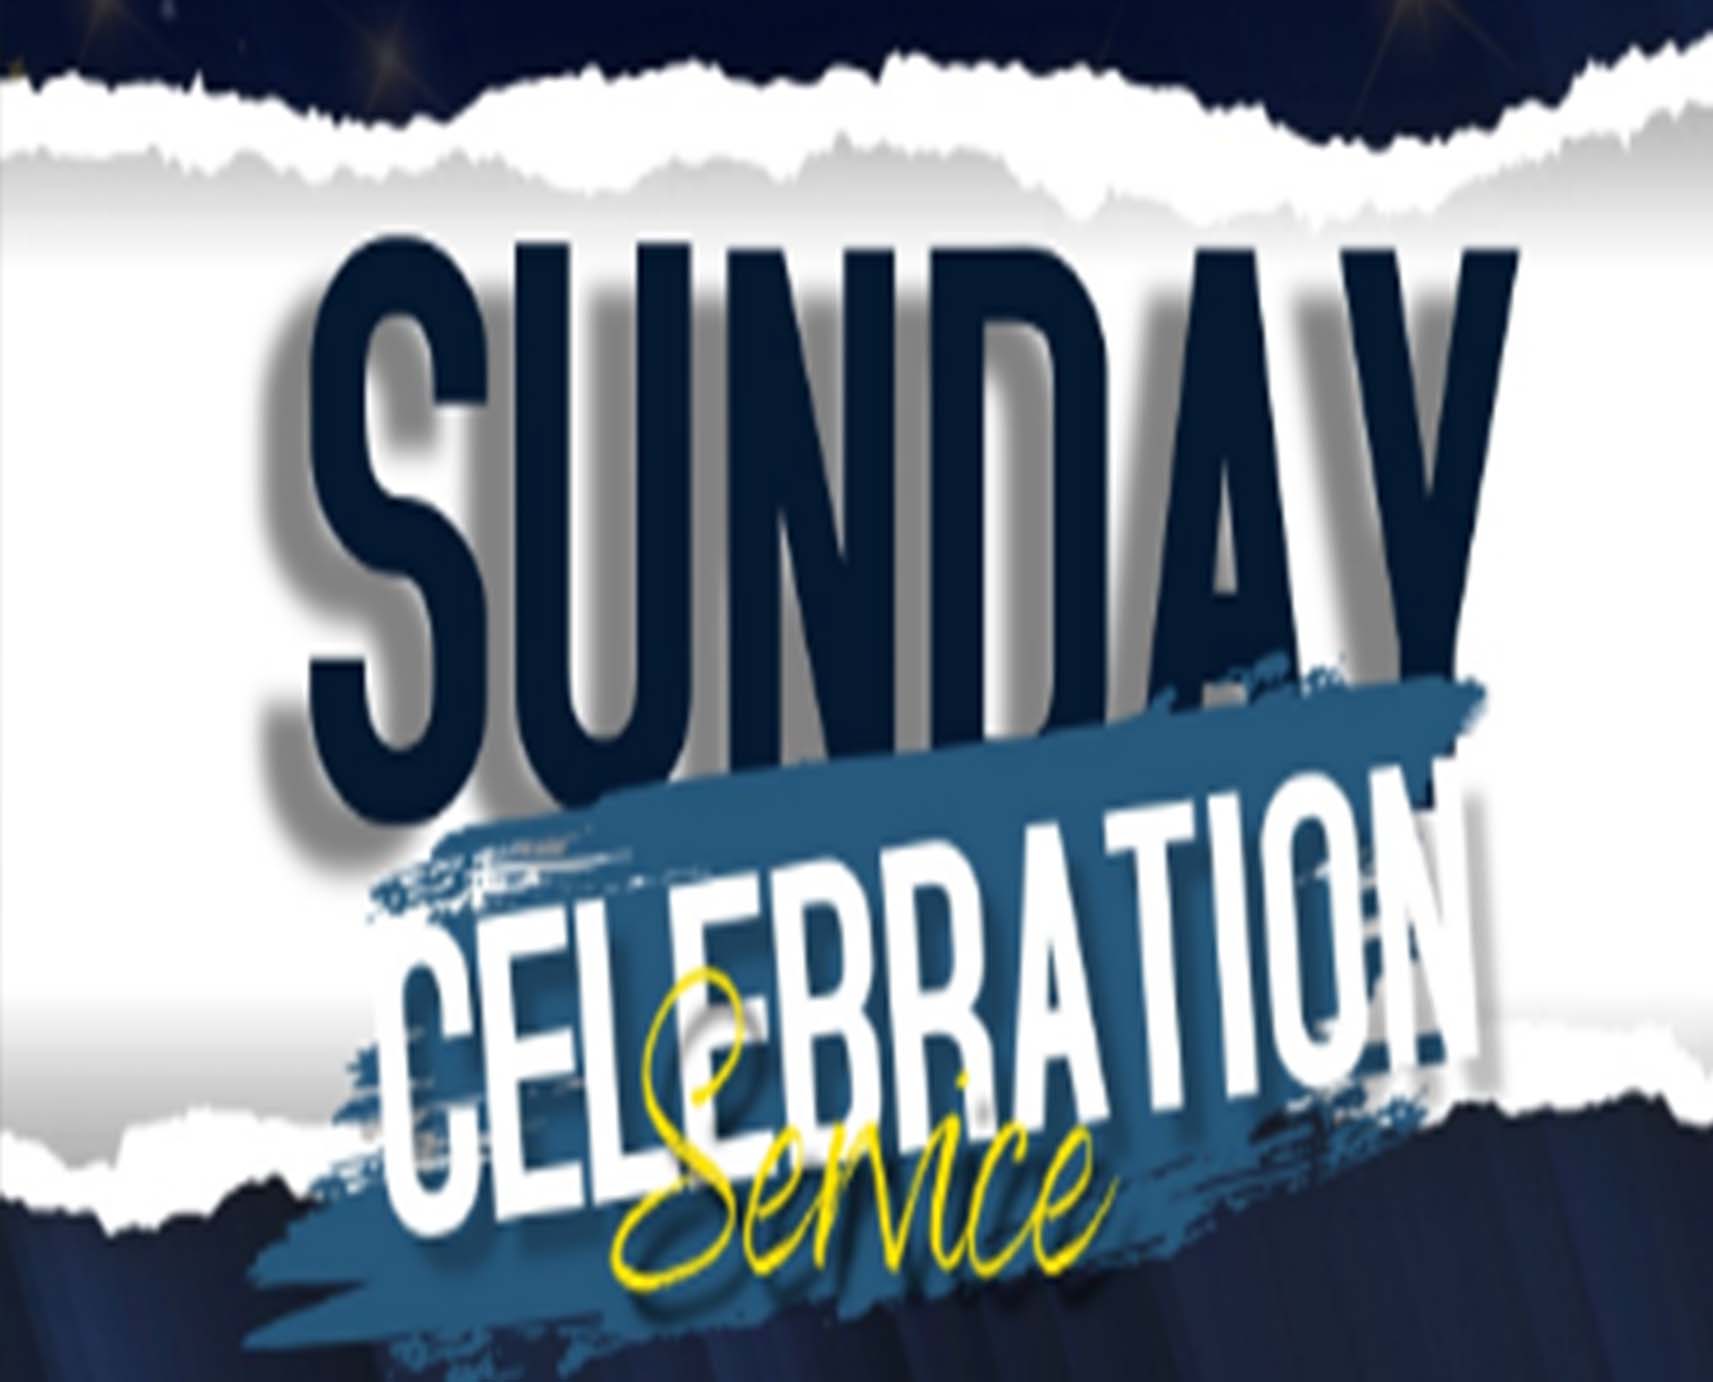 Celebration Service and Sunday Fun dayCelebration Service and Sunday Fun day